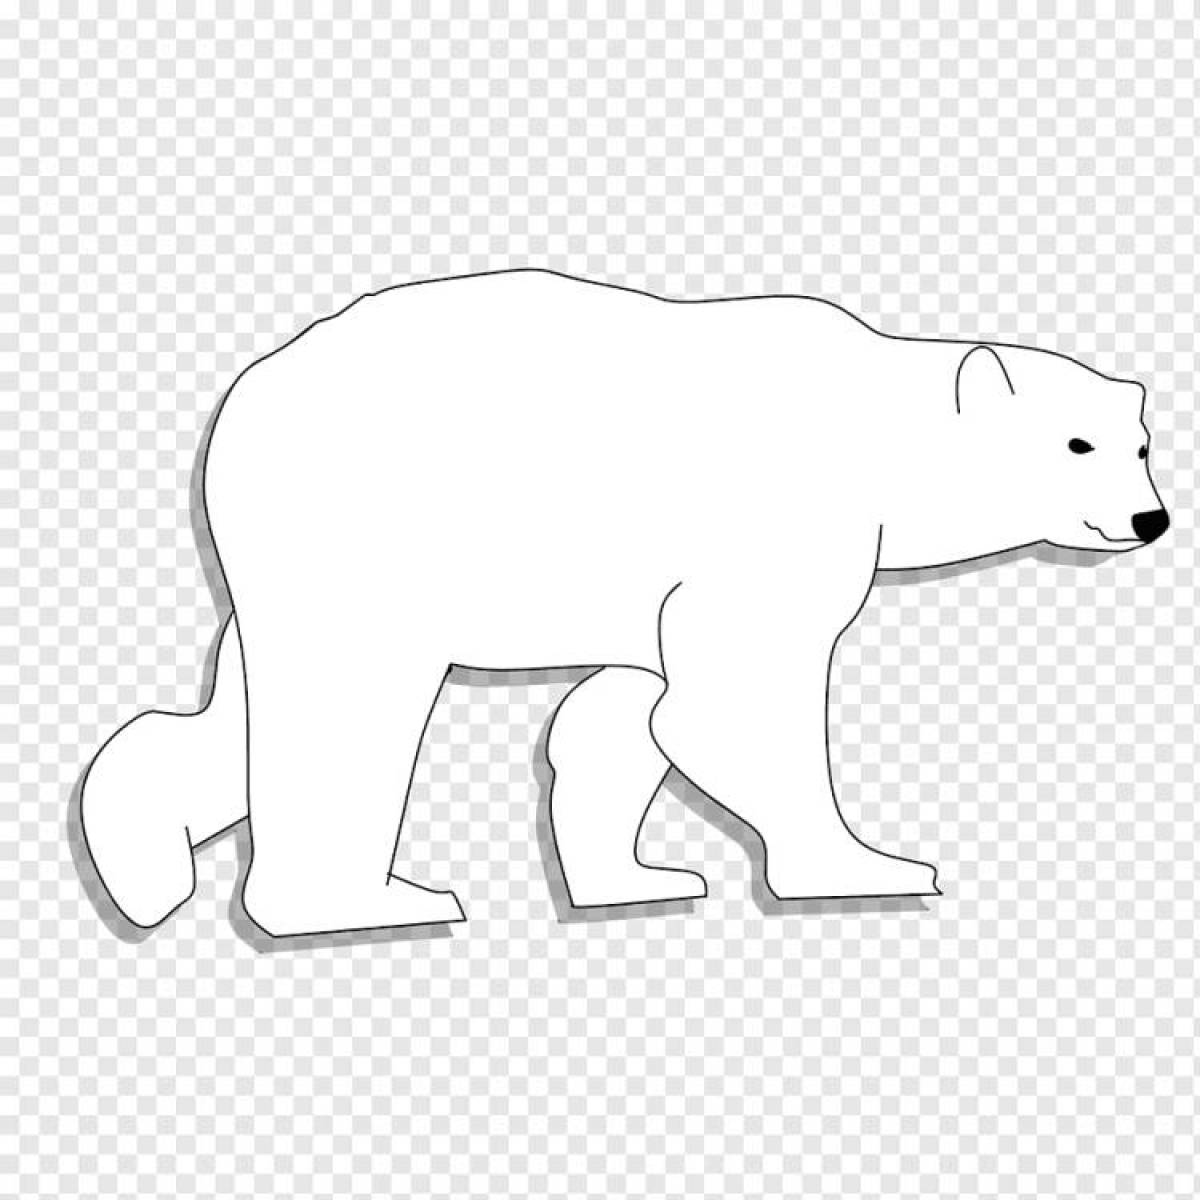 Gorgeous polar bear coloring book for kids